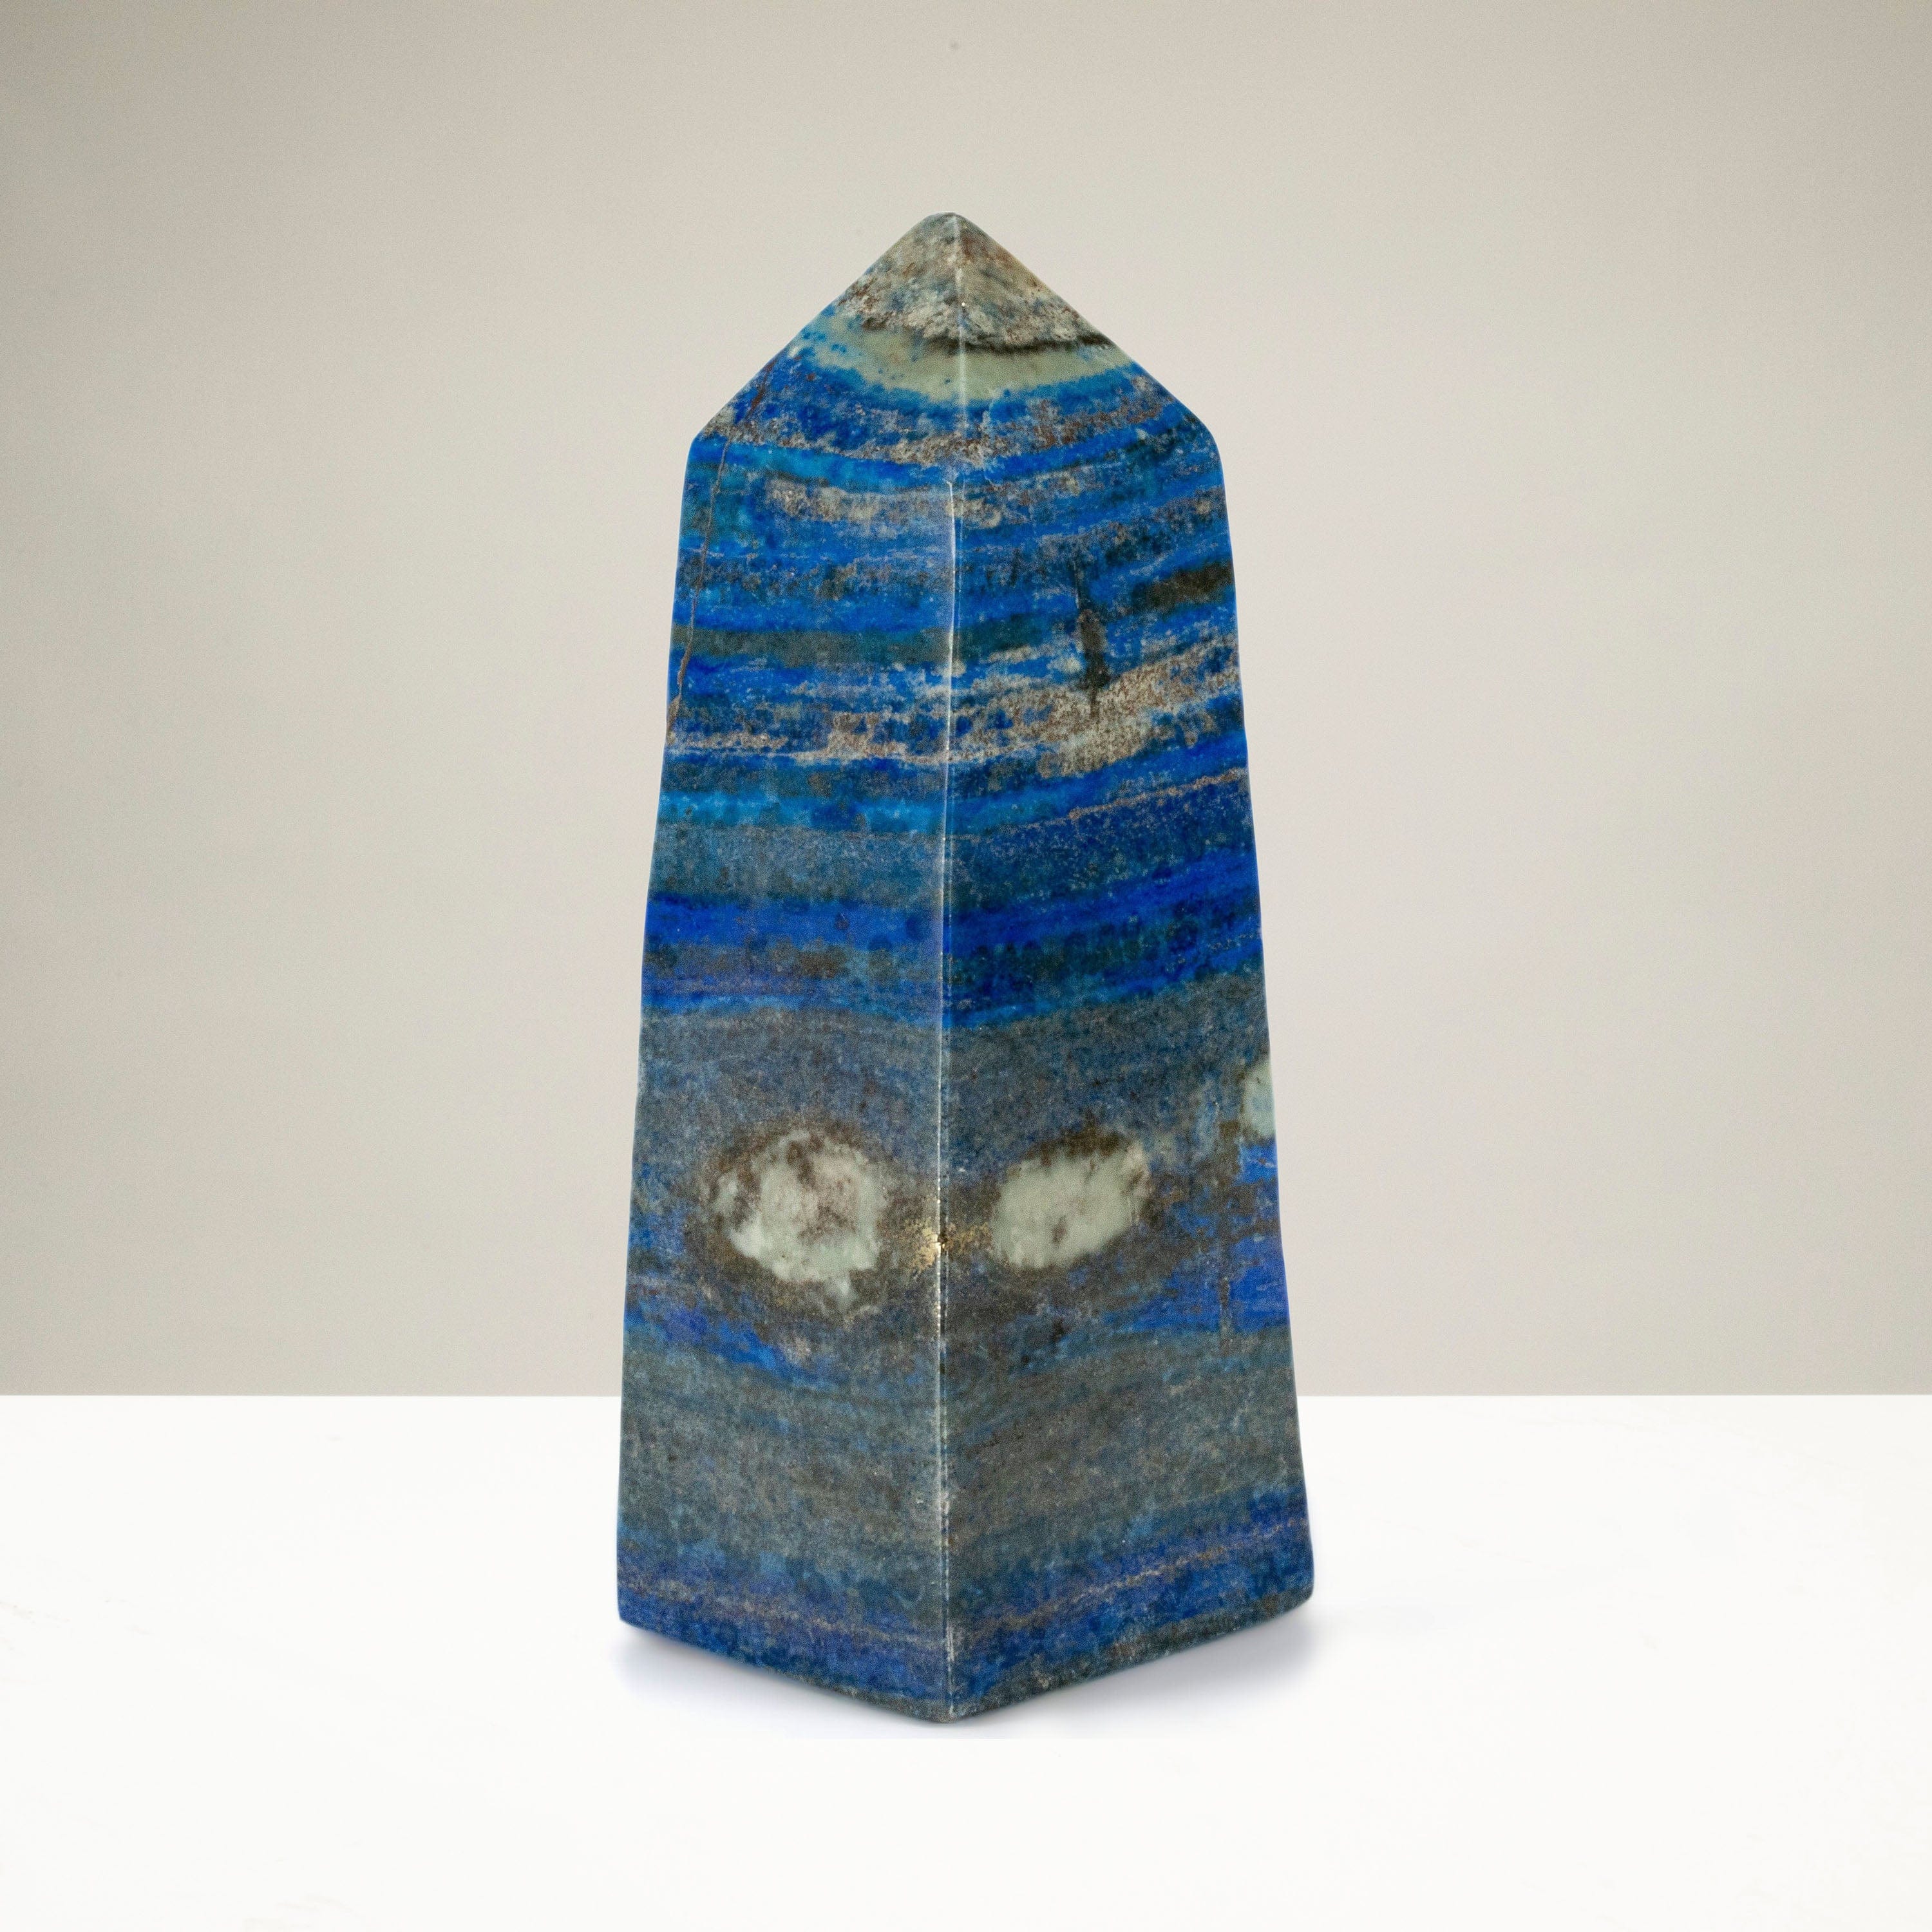 Kalifano Lapis Lapis Lazuli Polished Obelisk from Afghanistan - 9" / 6 lbs LPOB5600.001